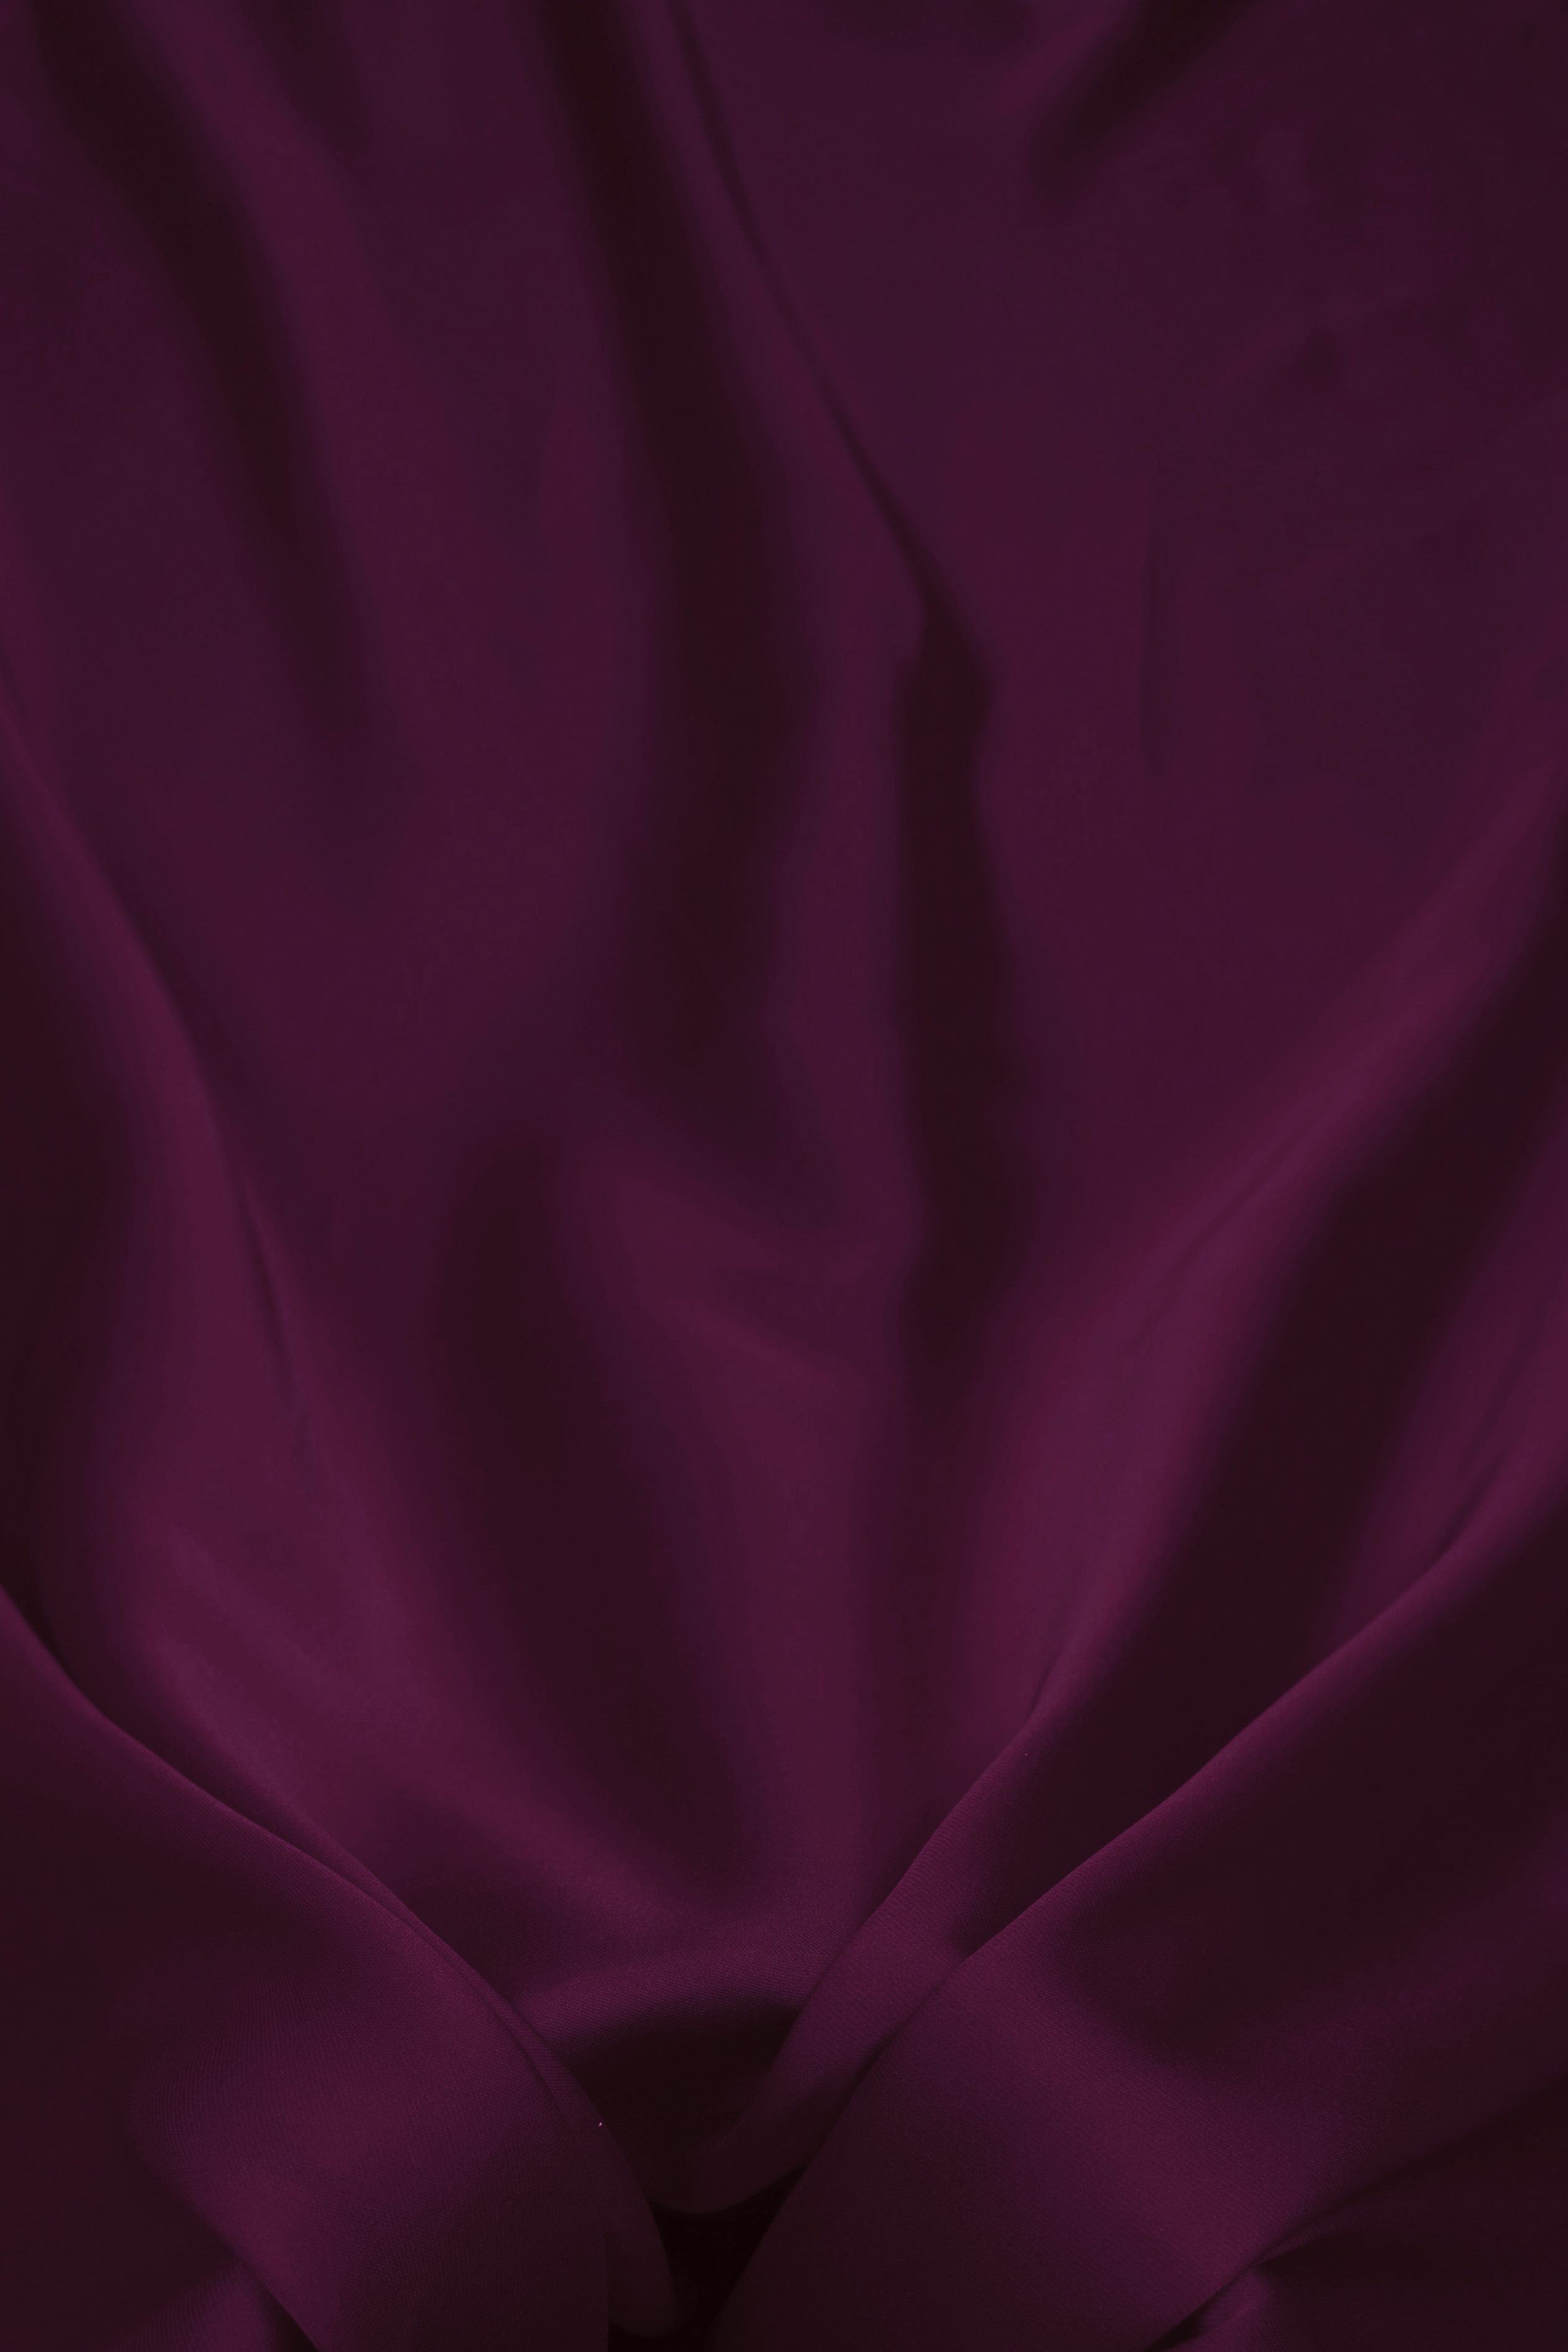 Cationic Dark Wine Plain Dyed Satin Georgette Fabric